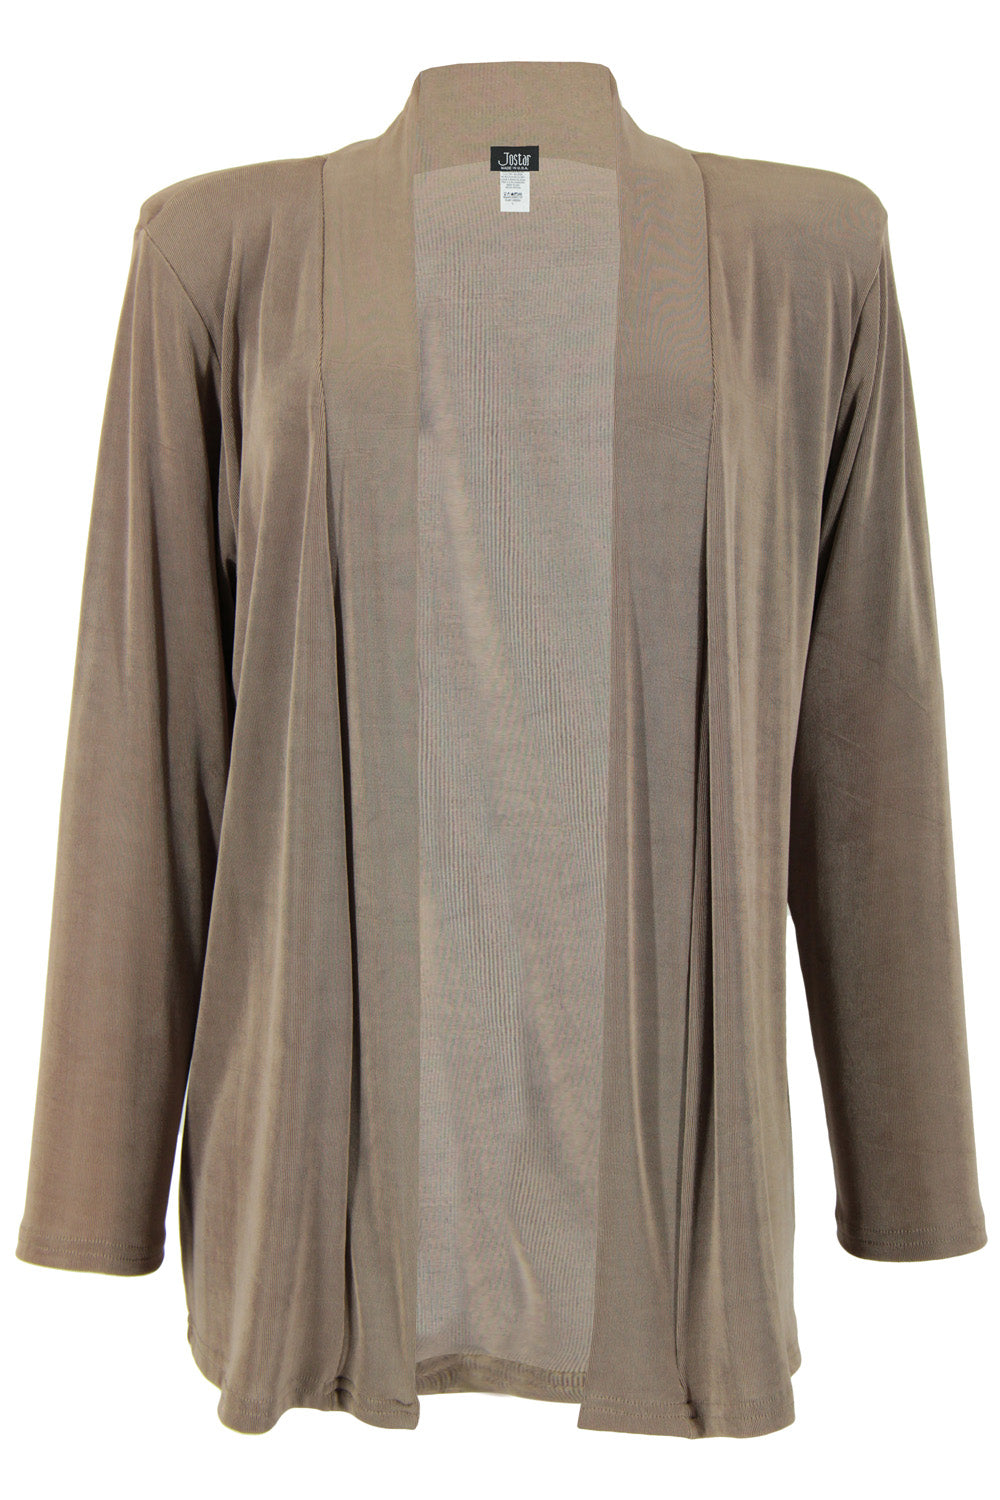 Jostar Women's Non Iron Drape Jacket Long Sleeve, 400AY-L - Jostar Online